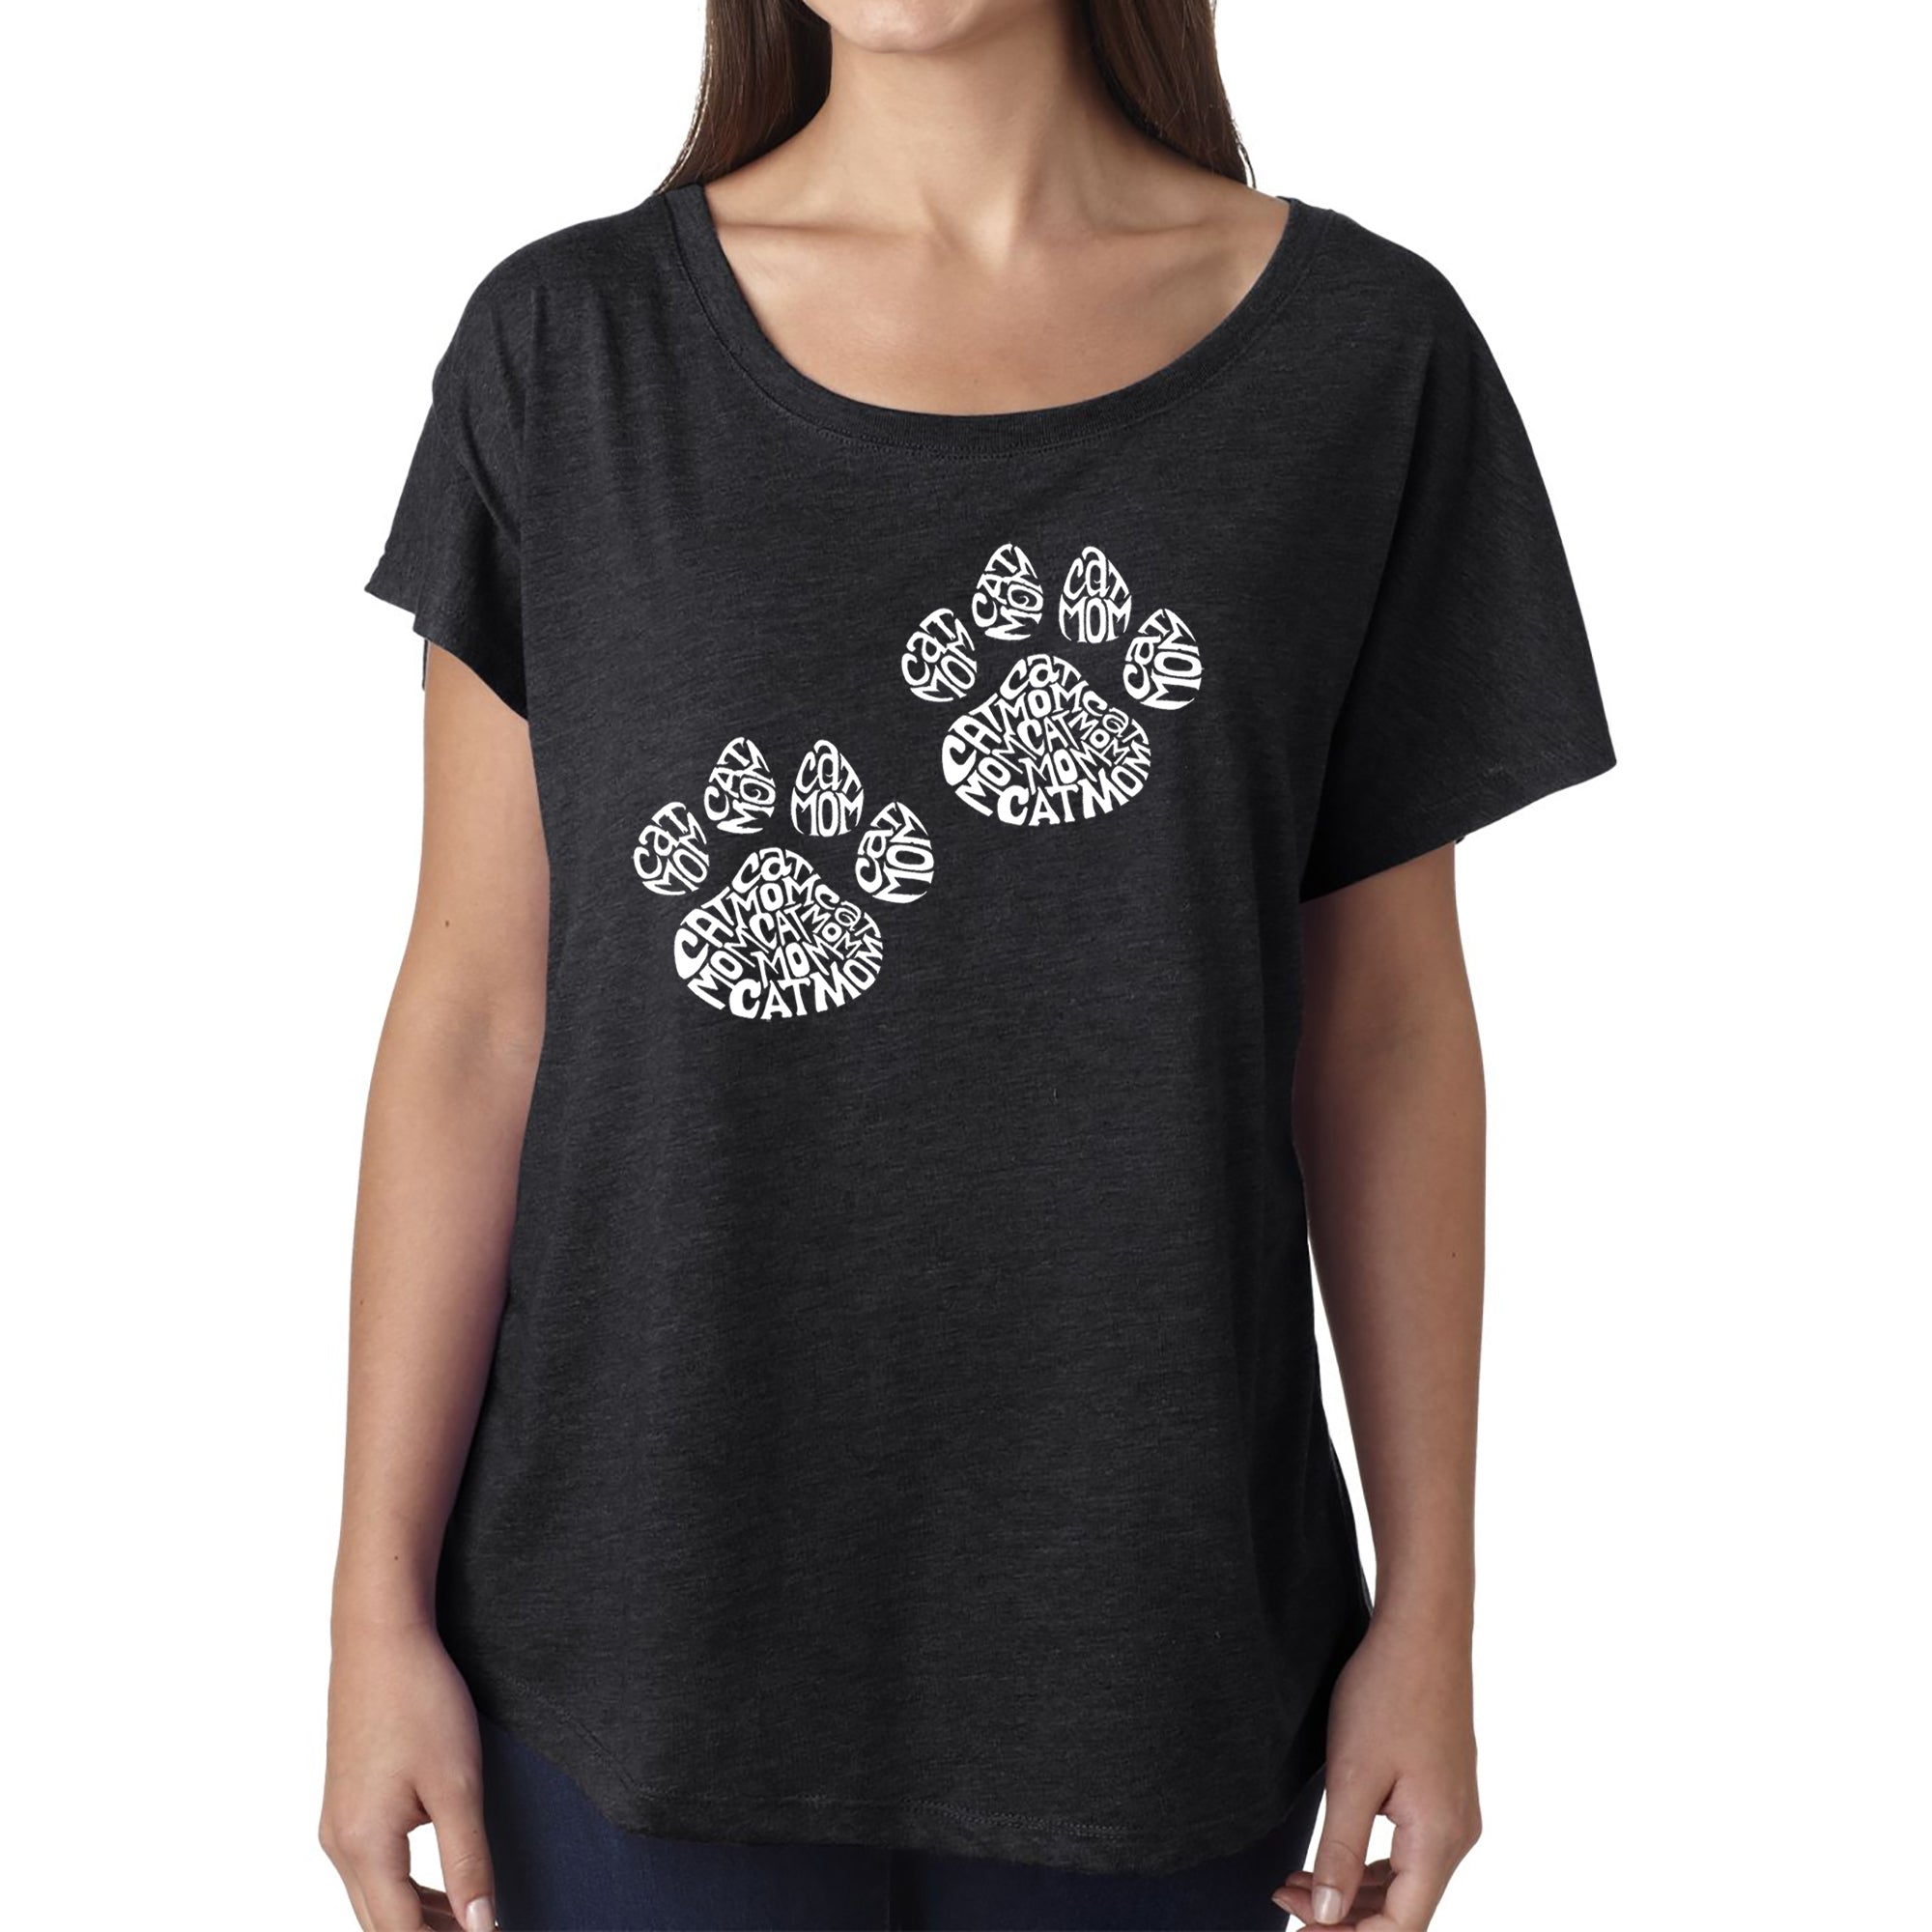 Cat Mom - Women's Loose Fit Dolman Cut Word Art Shirt - Black - Medium